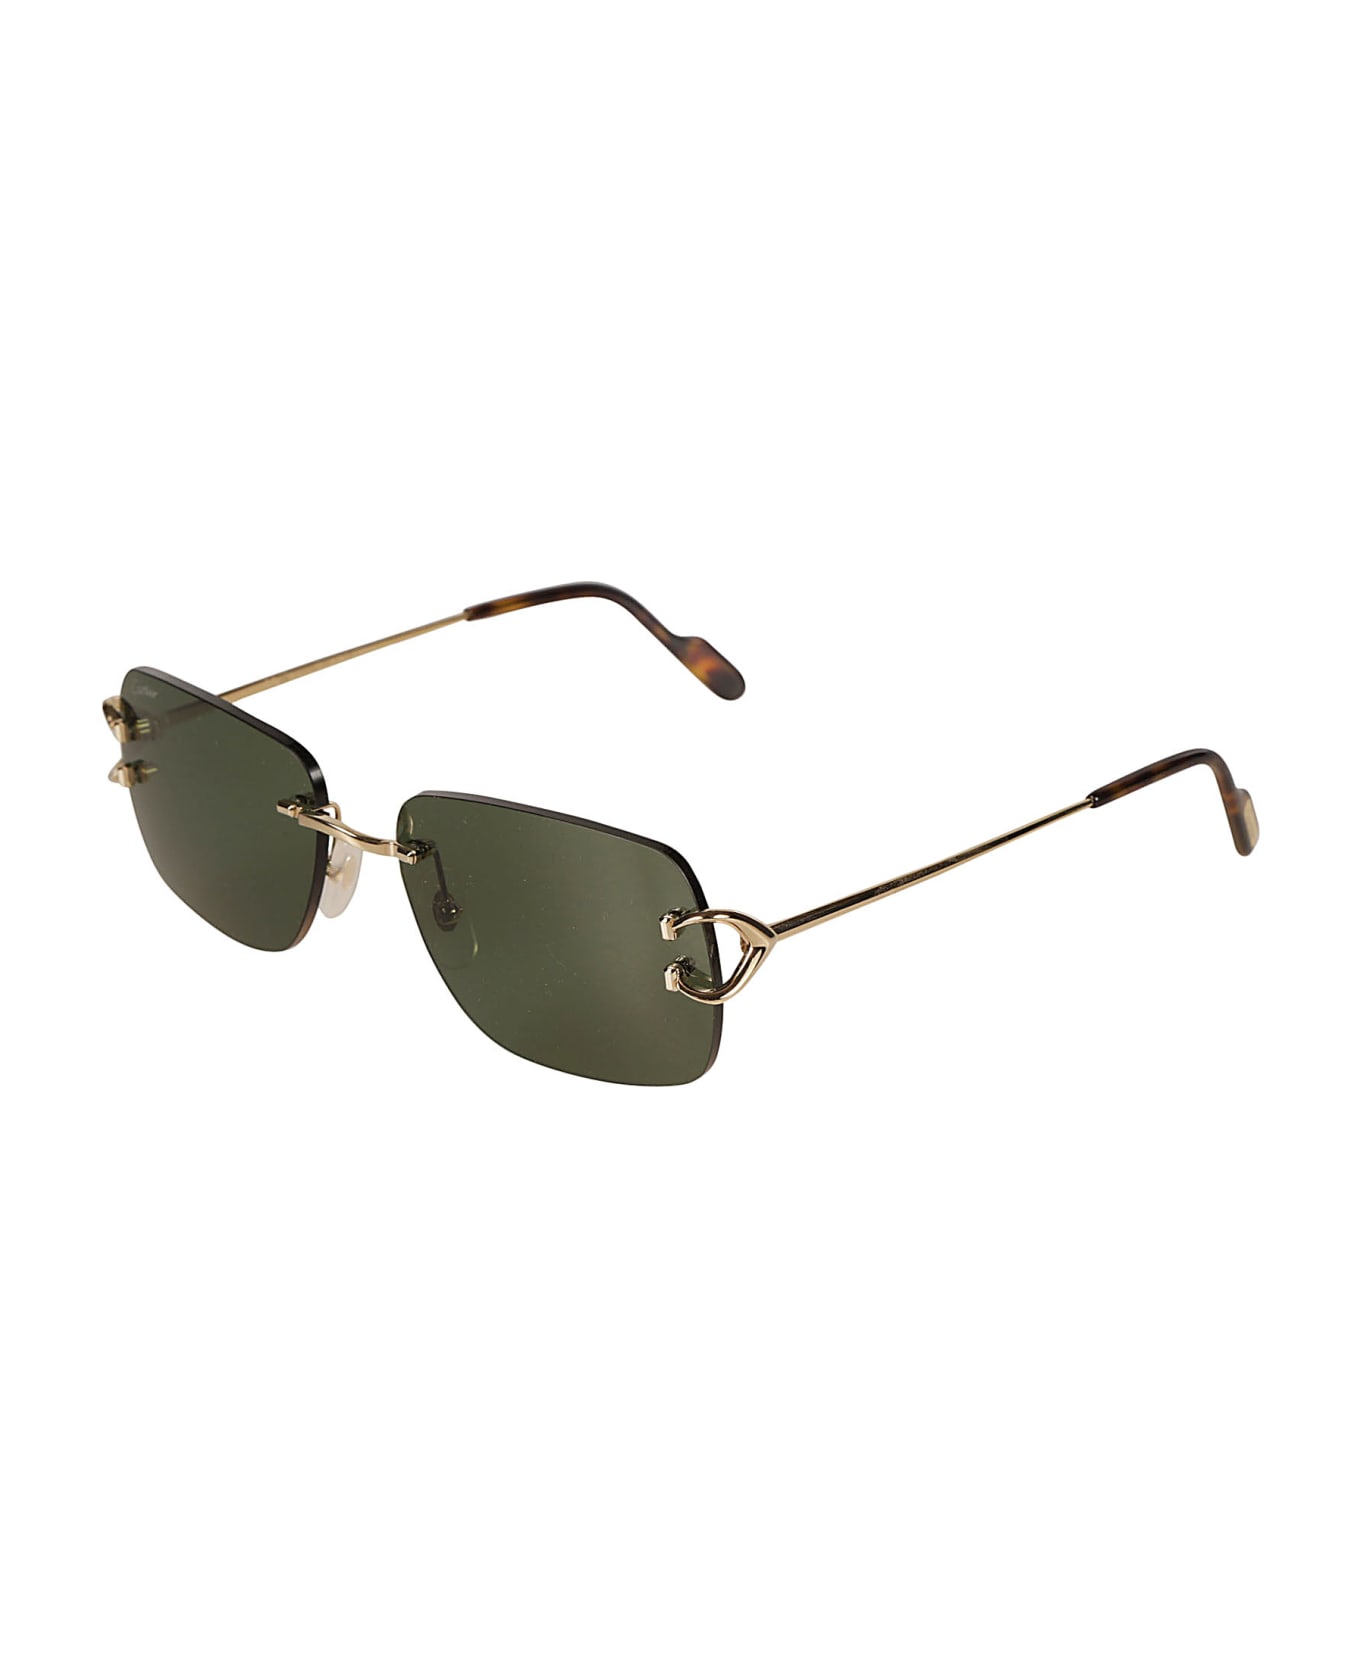 Cartier Eyewear Frame-less Square Sunglasses Sunglasses - Gold/Green サングラス